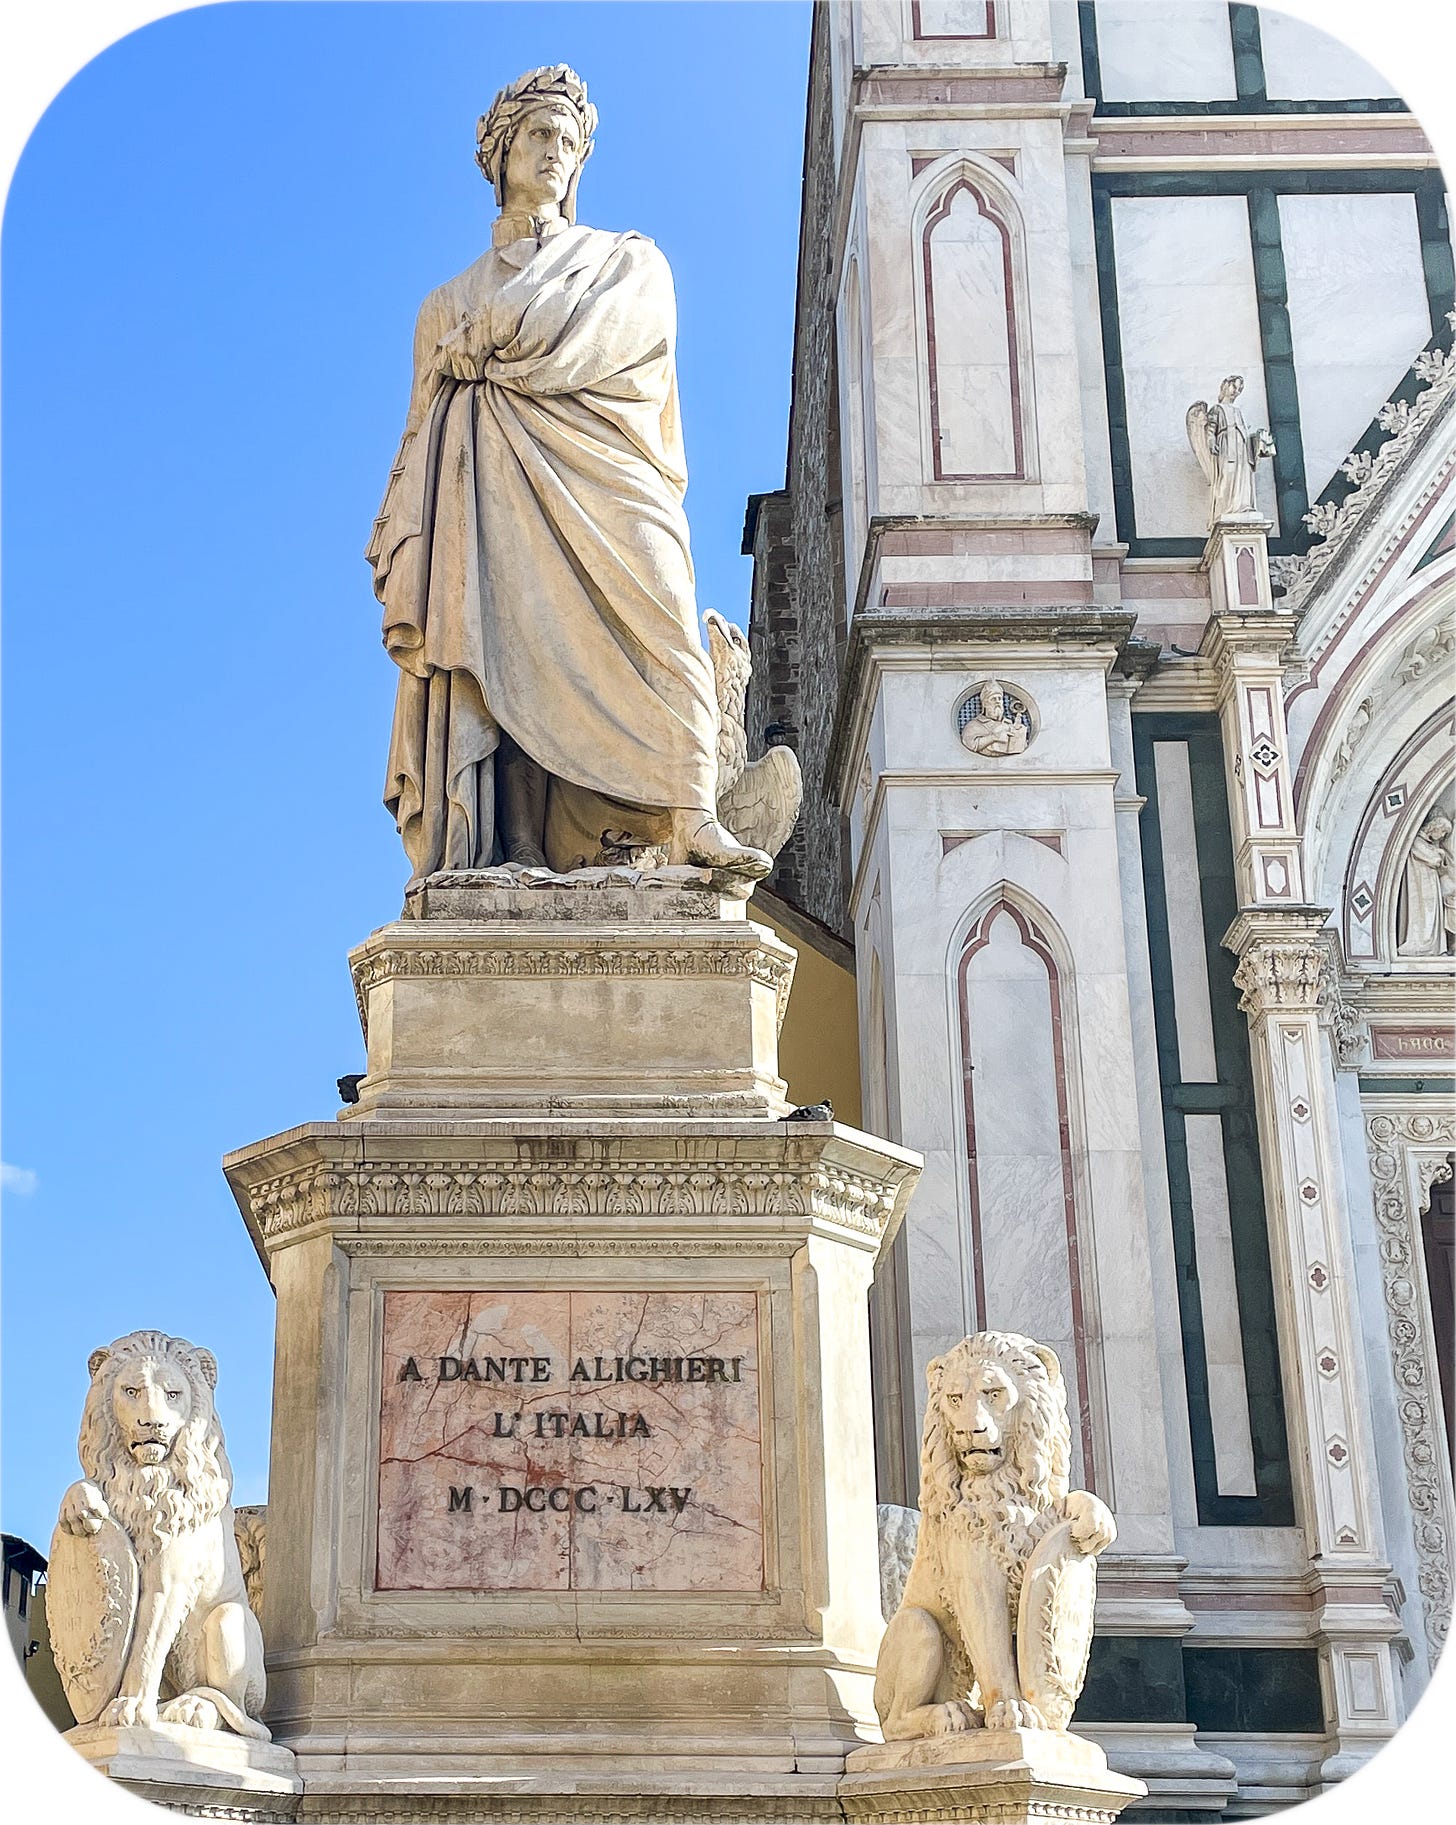 Sculpture of Dante outside of Santa Croce, Florence